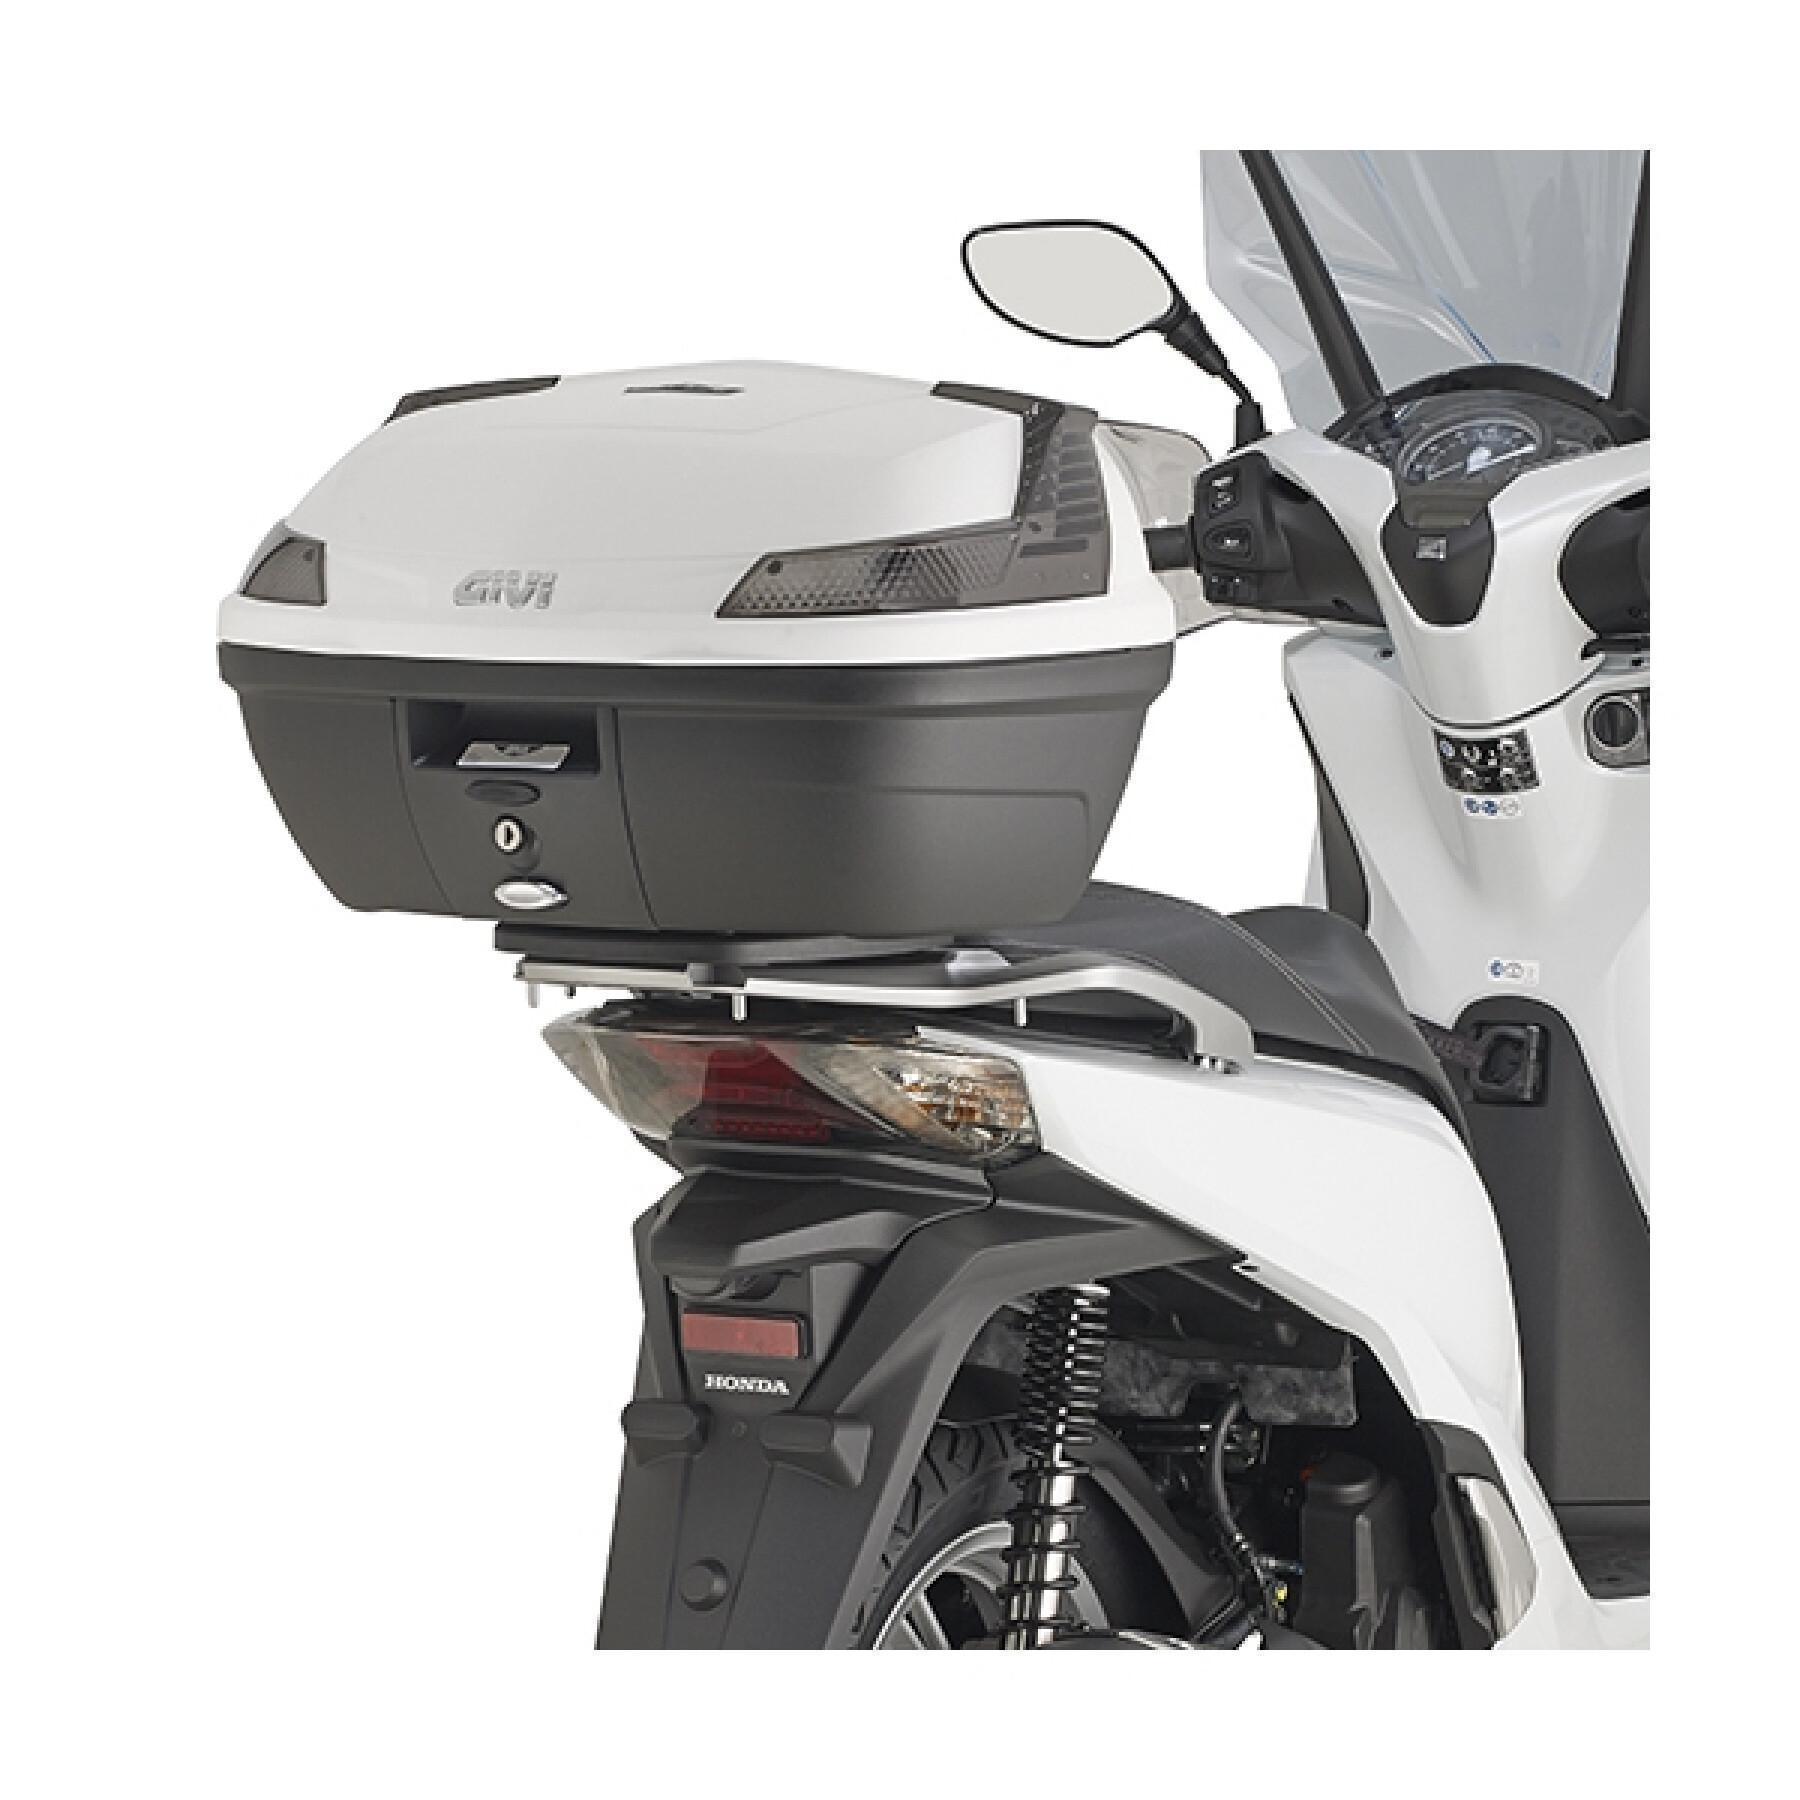 Motorcycle top case support Givi Monokey Suzuki AN 250-400 Burgman (03 à 06)